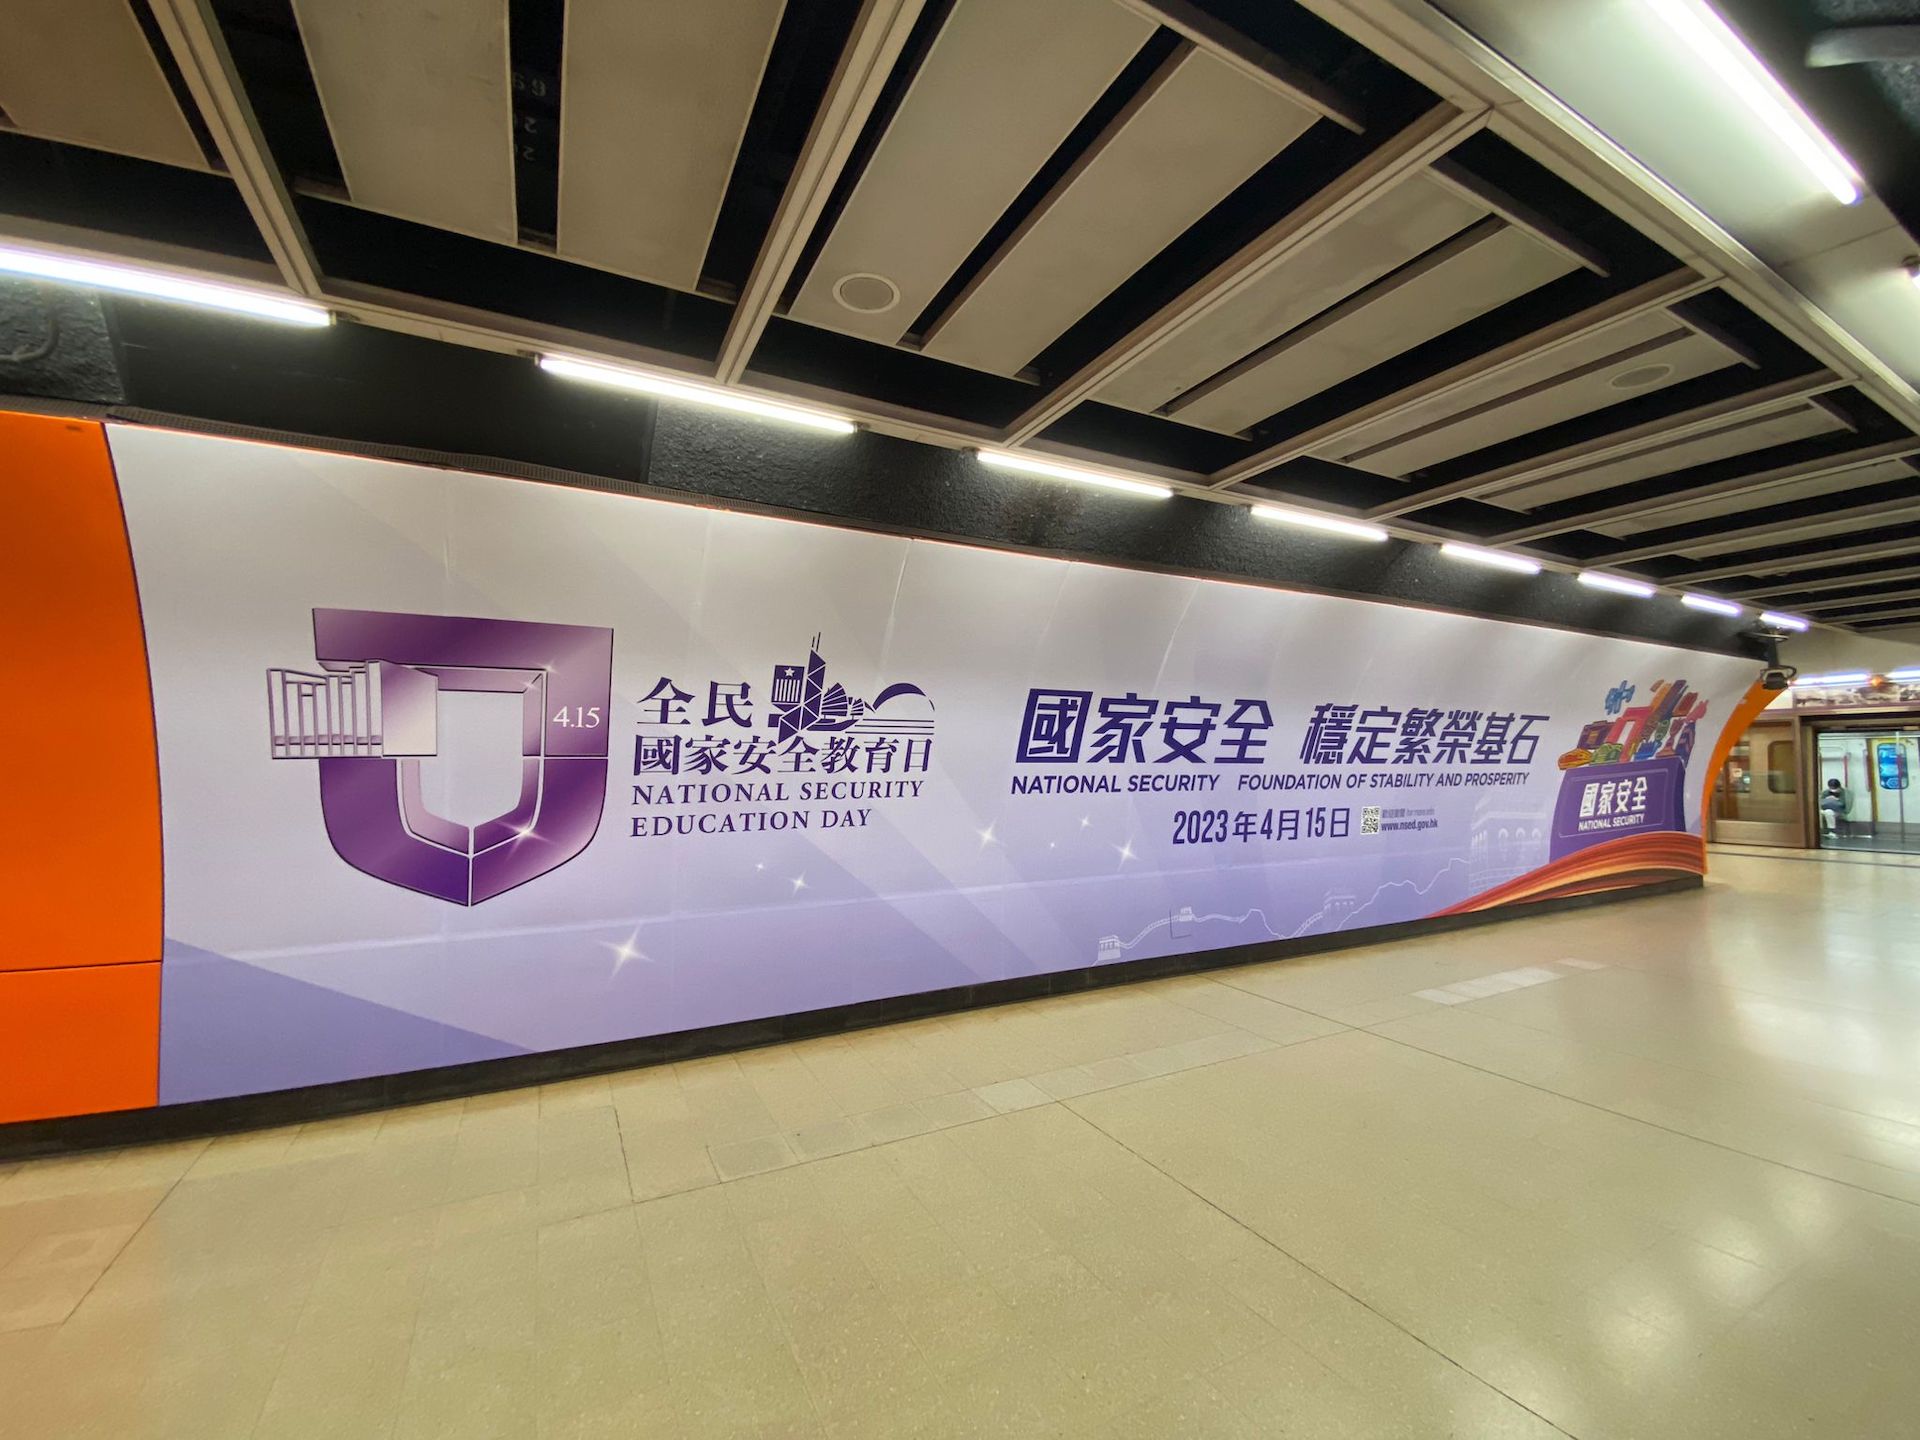 MTR North Point Station Lower Platform